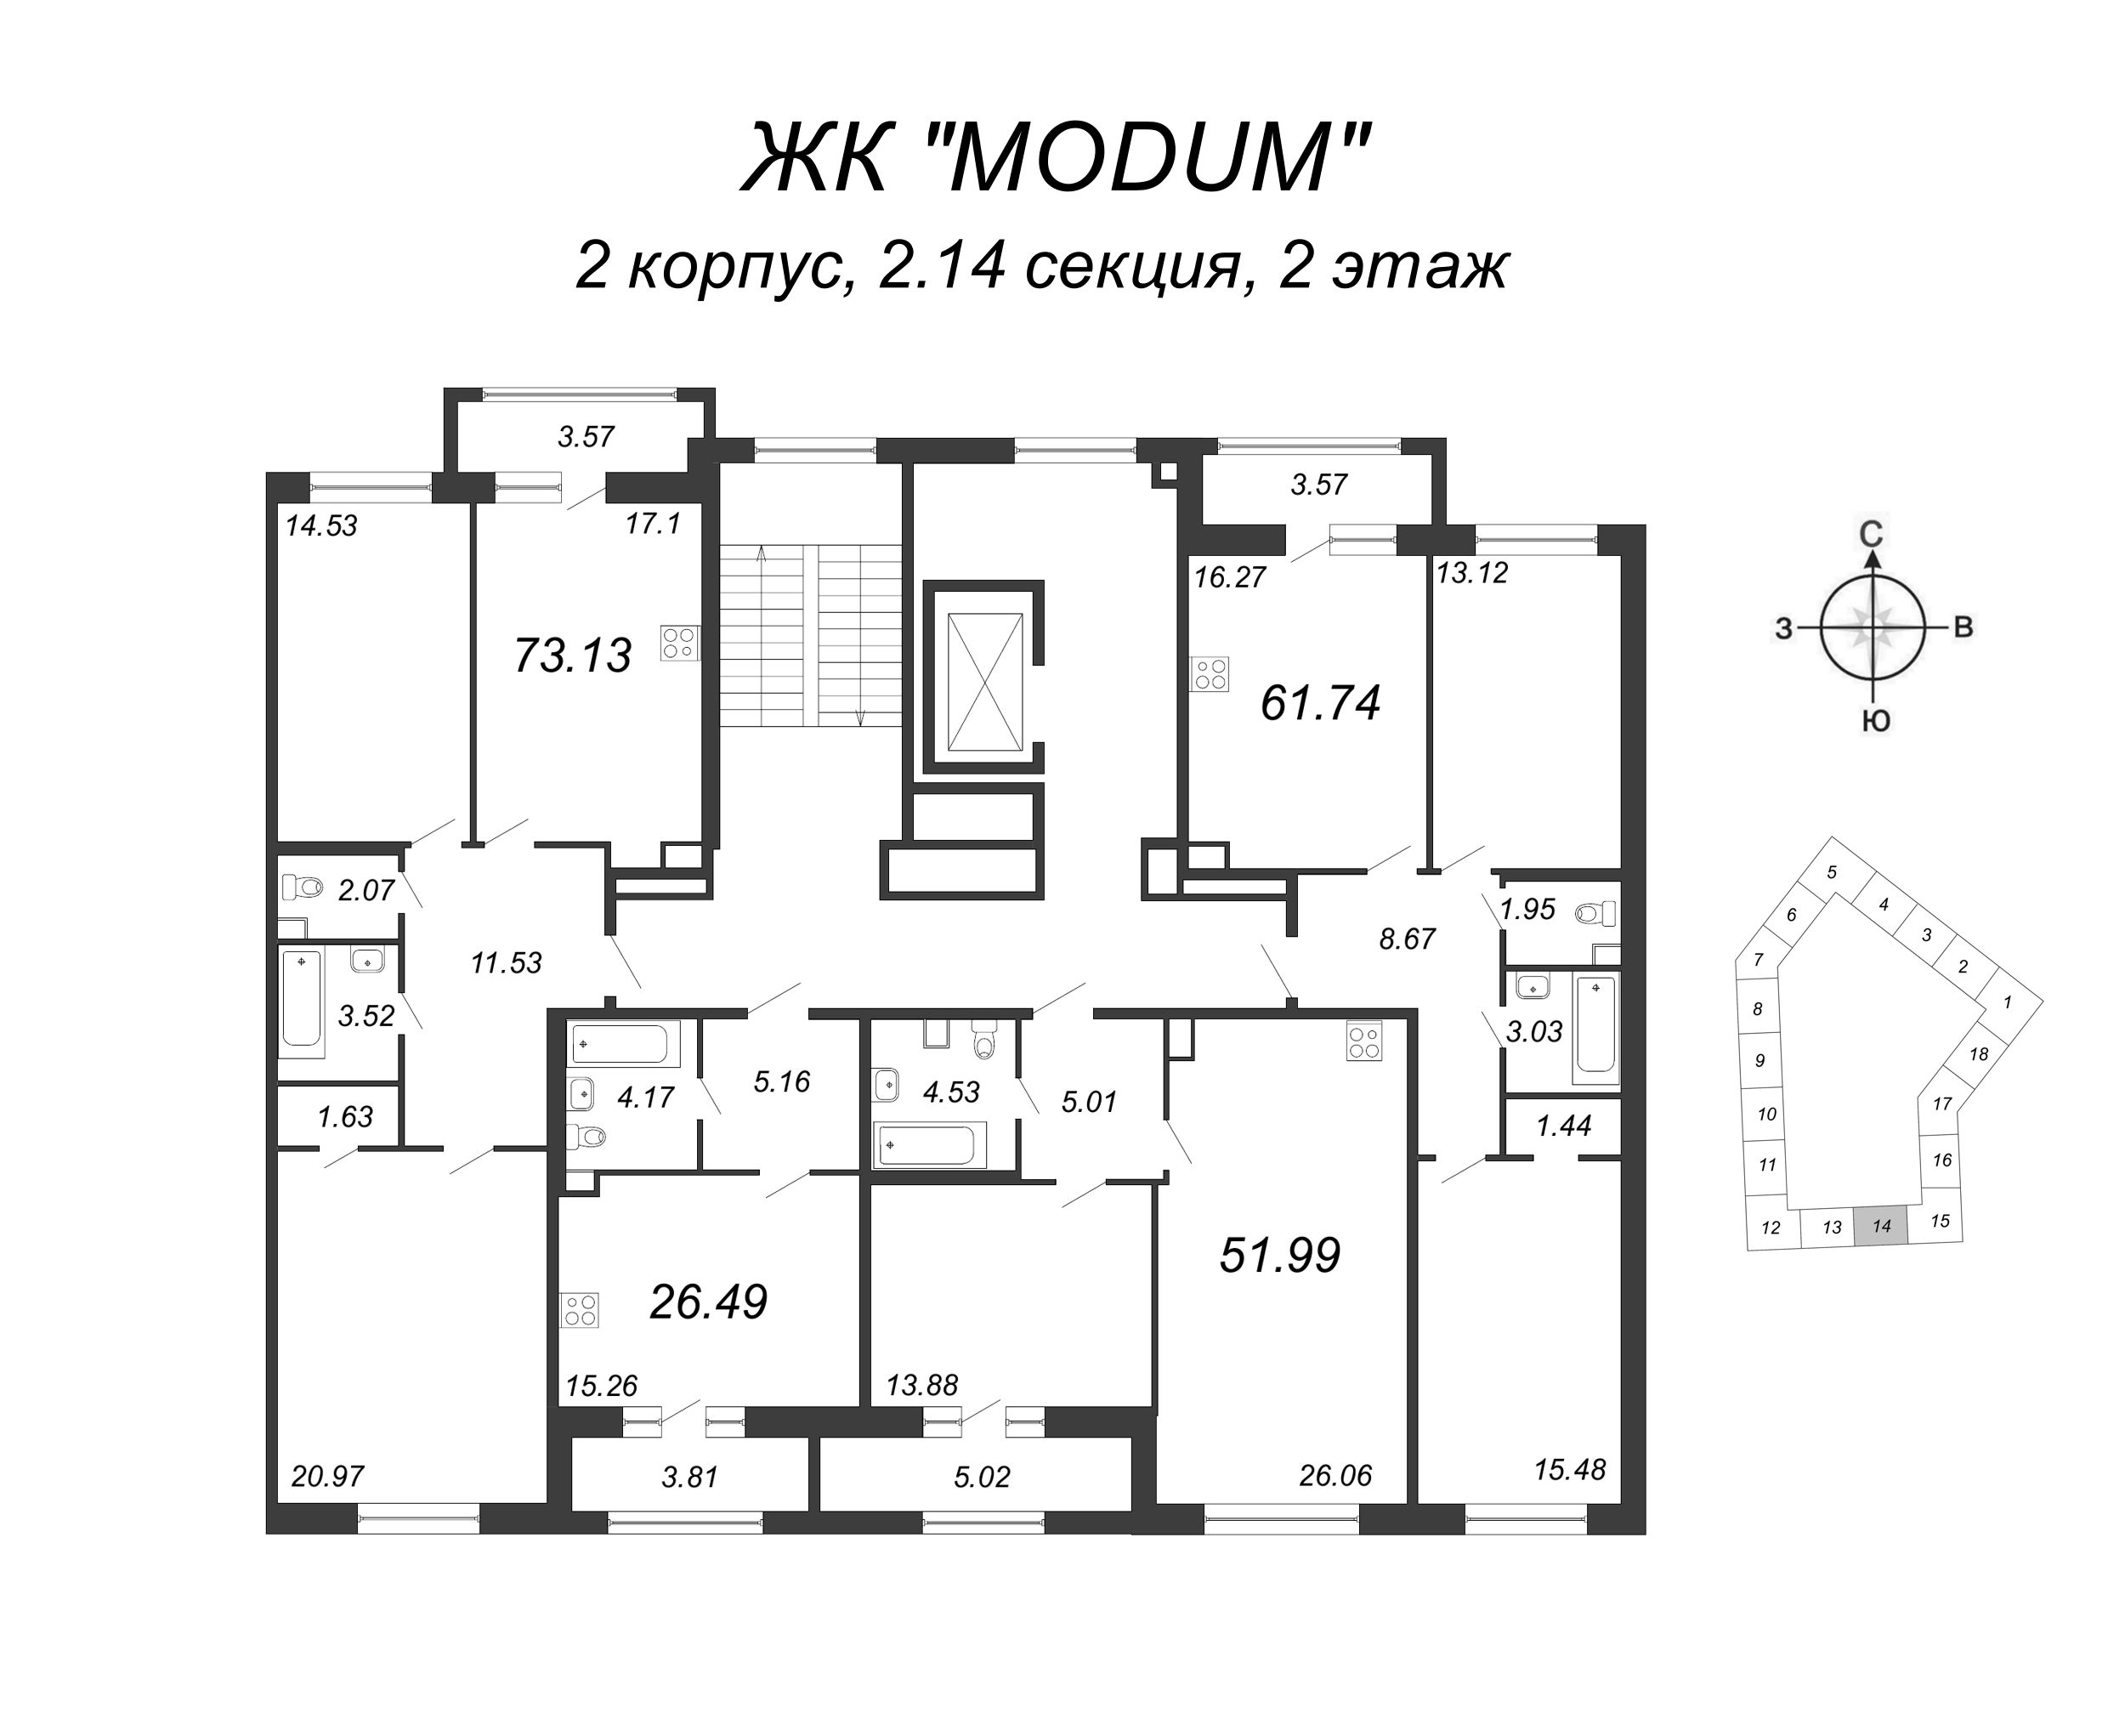 3-комнатная (Евро) квартира, 73.13 м² - планировка этажа